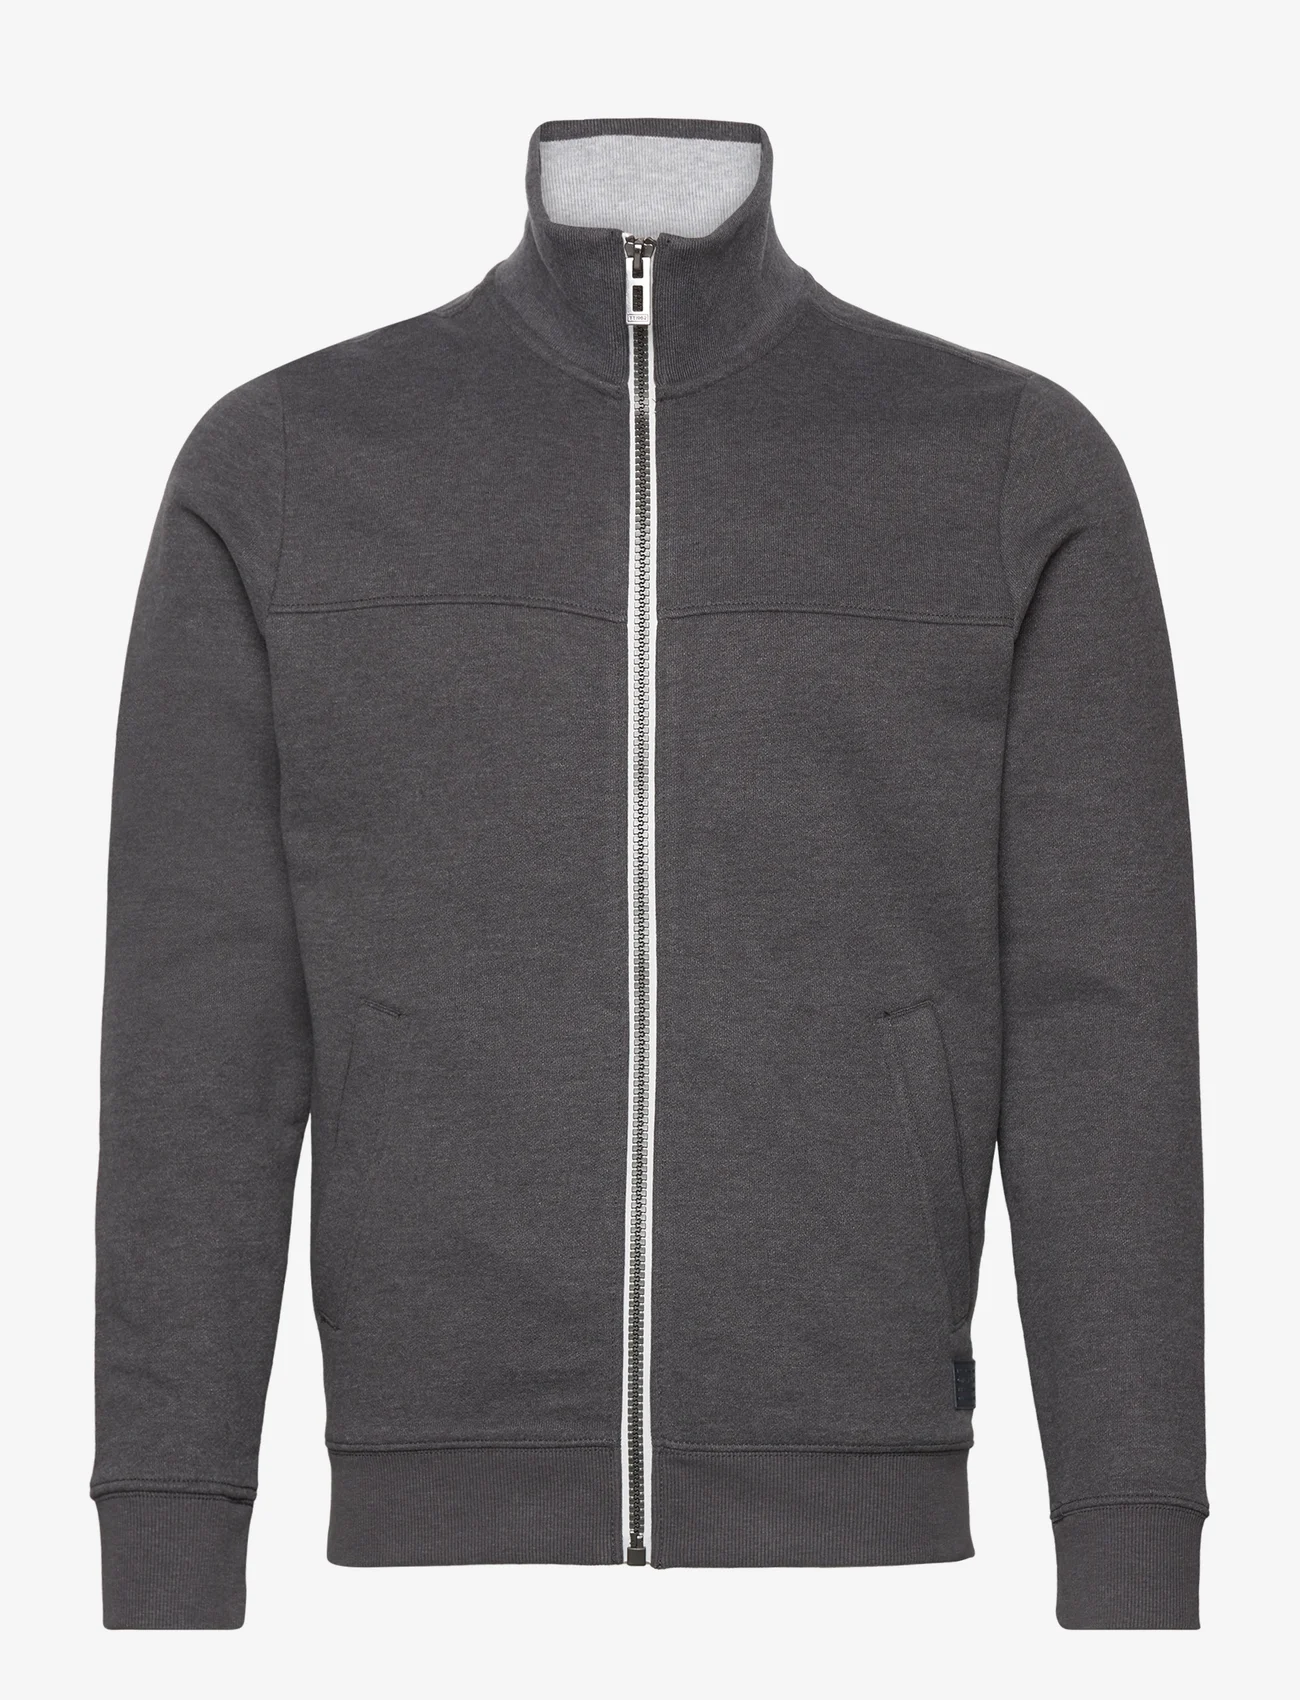 Tom Tailor - cutline sweat jacket - geburtstagsgeschenke - dark grey melange - 0